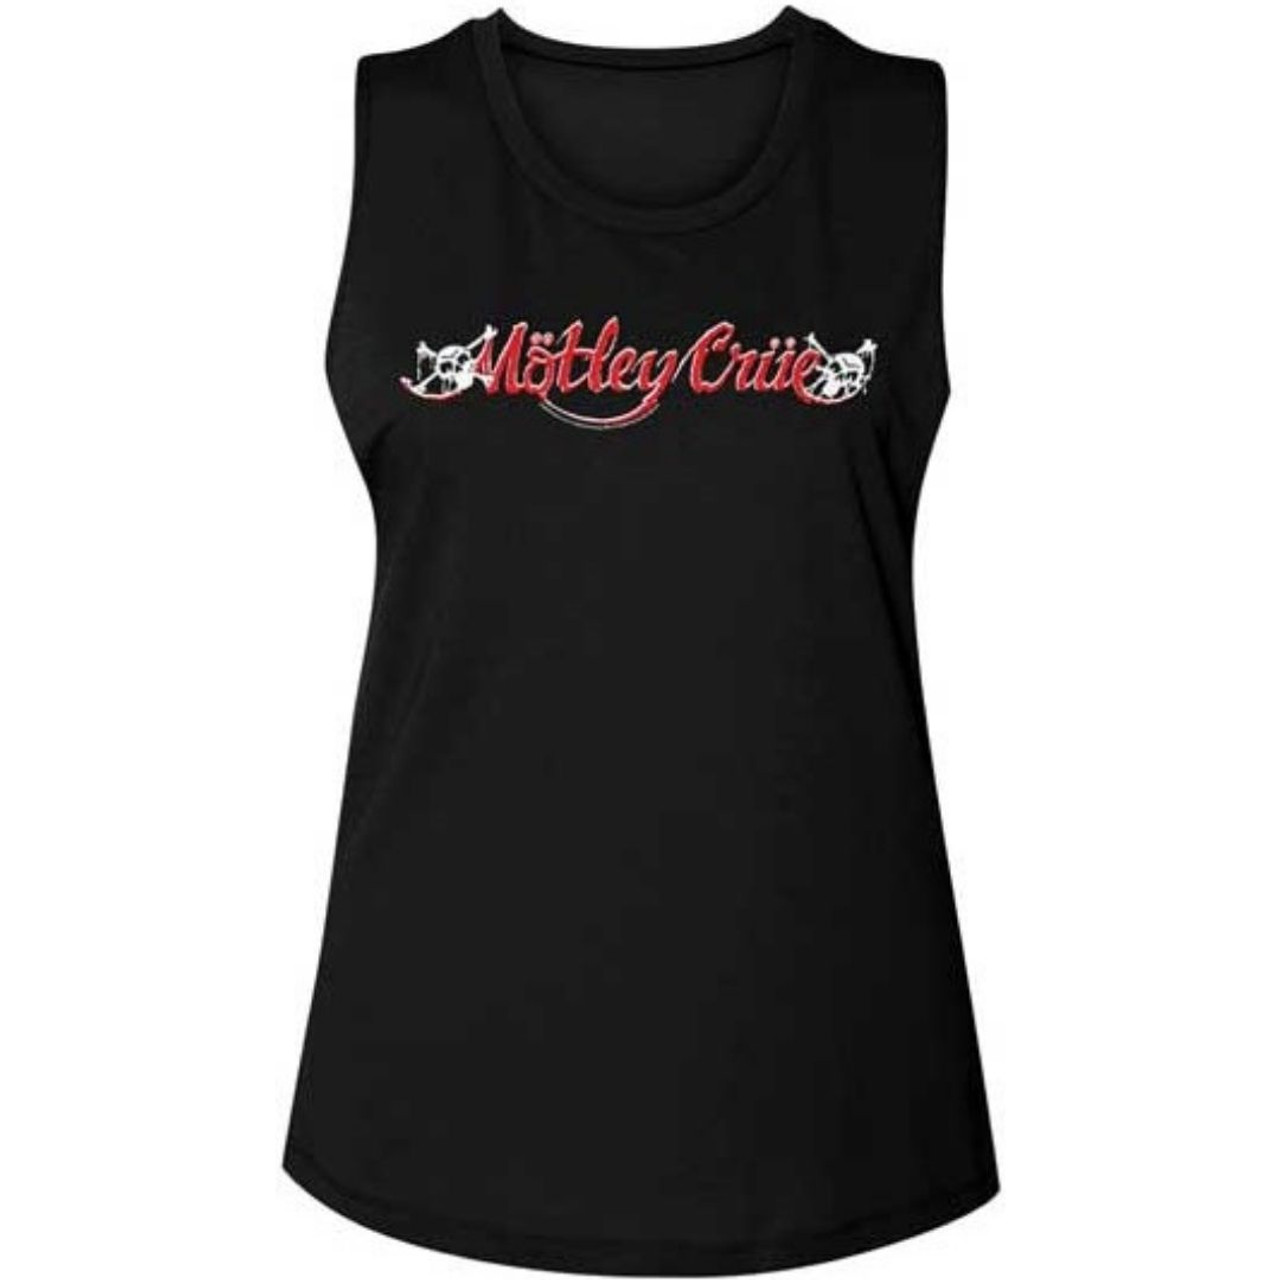 https://cdn11.bigcommerce.com/s-fbddb/images/stencil/1280x1280/products/1167/3335/motley-crue-logo-womens-black-vintage-sleeveless-muscle-tank-top-fashion-t-shirt__43572.1632944272.jpg?c=2&imbypass=on